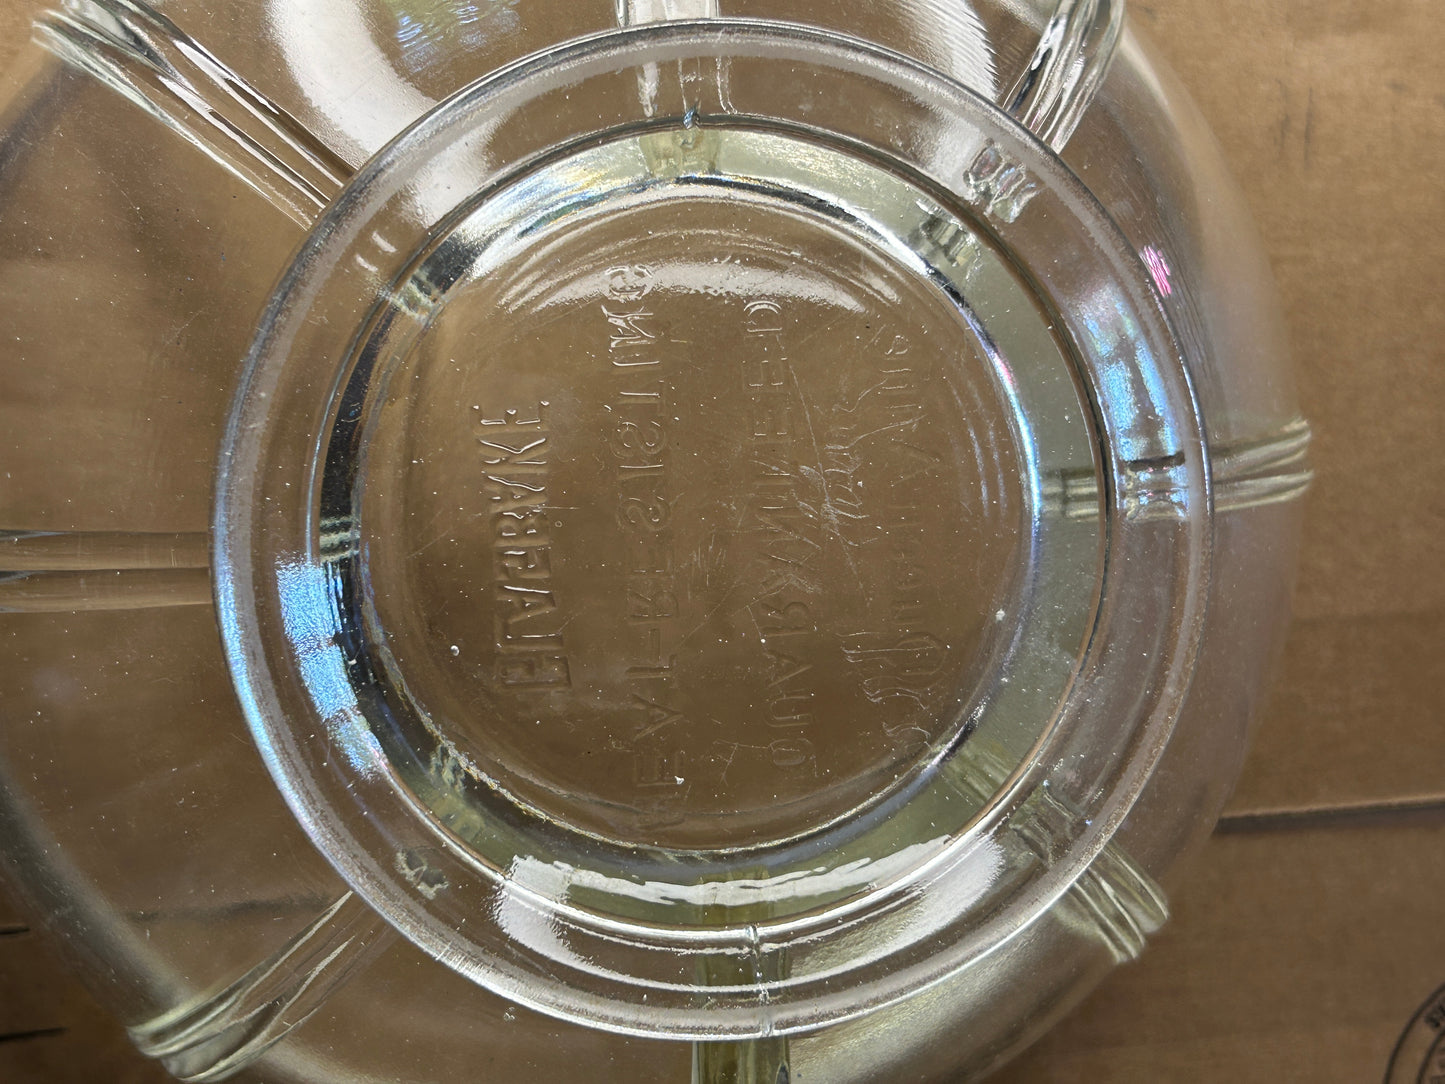 Vintage 1930s GlasBake Queen Anne Clear Glass 2 Quart Casserole Bowl